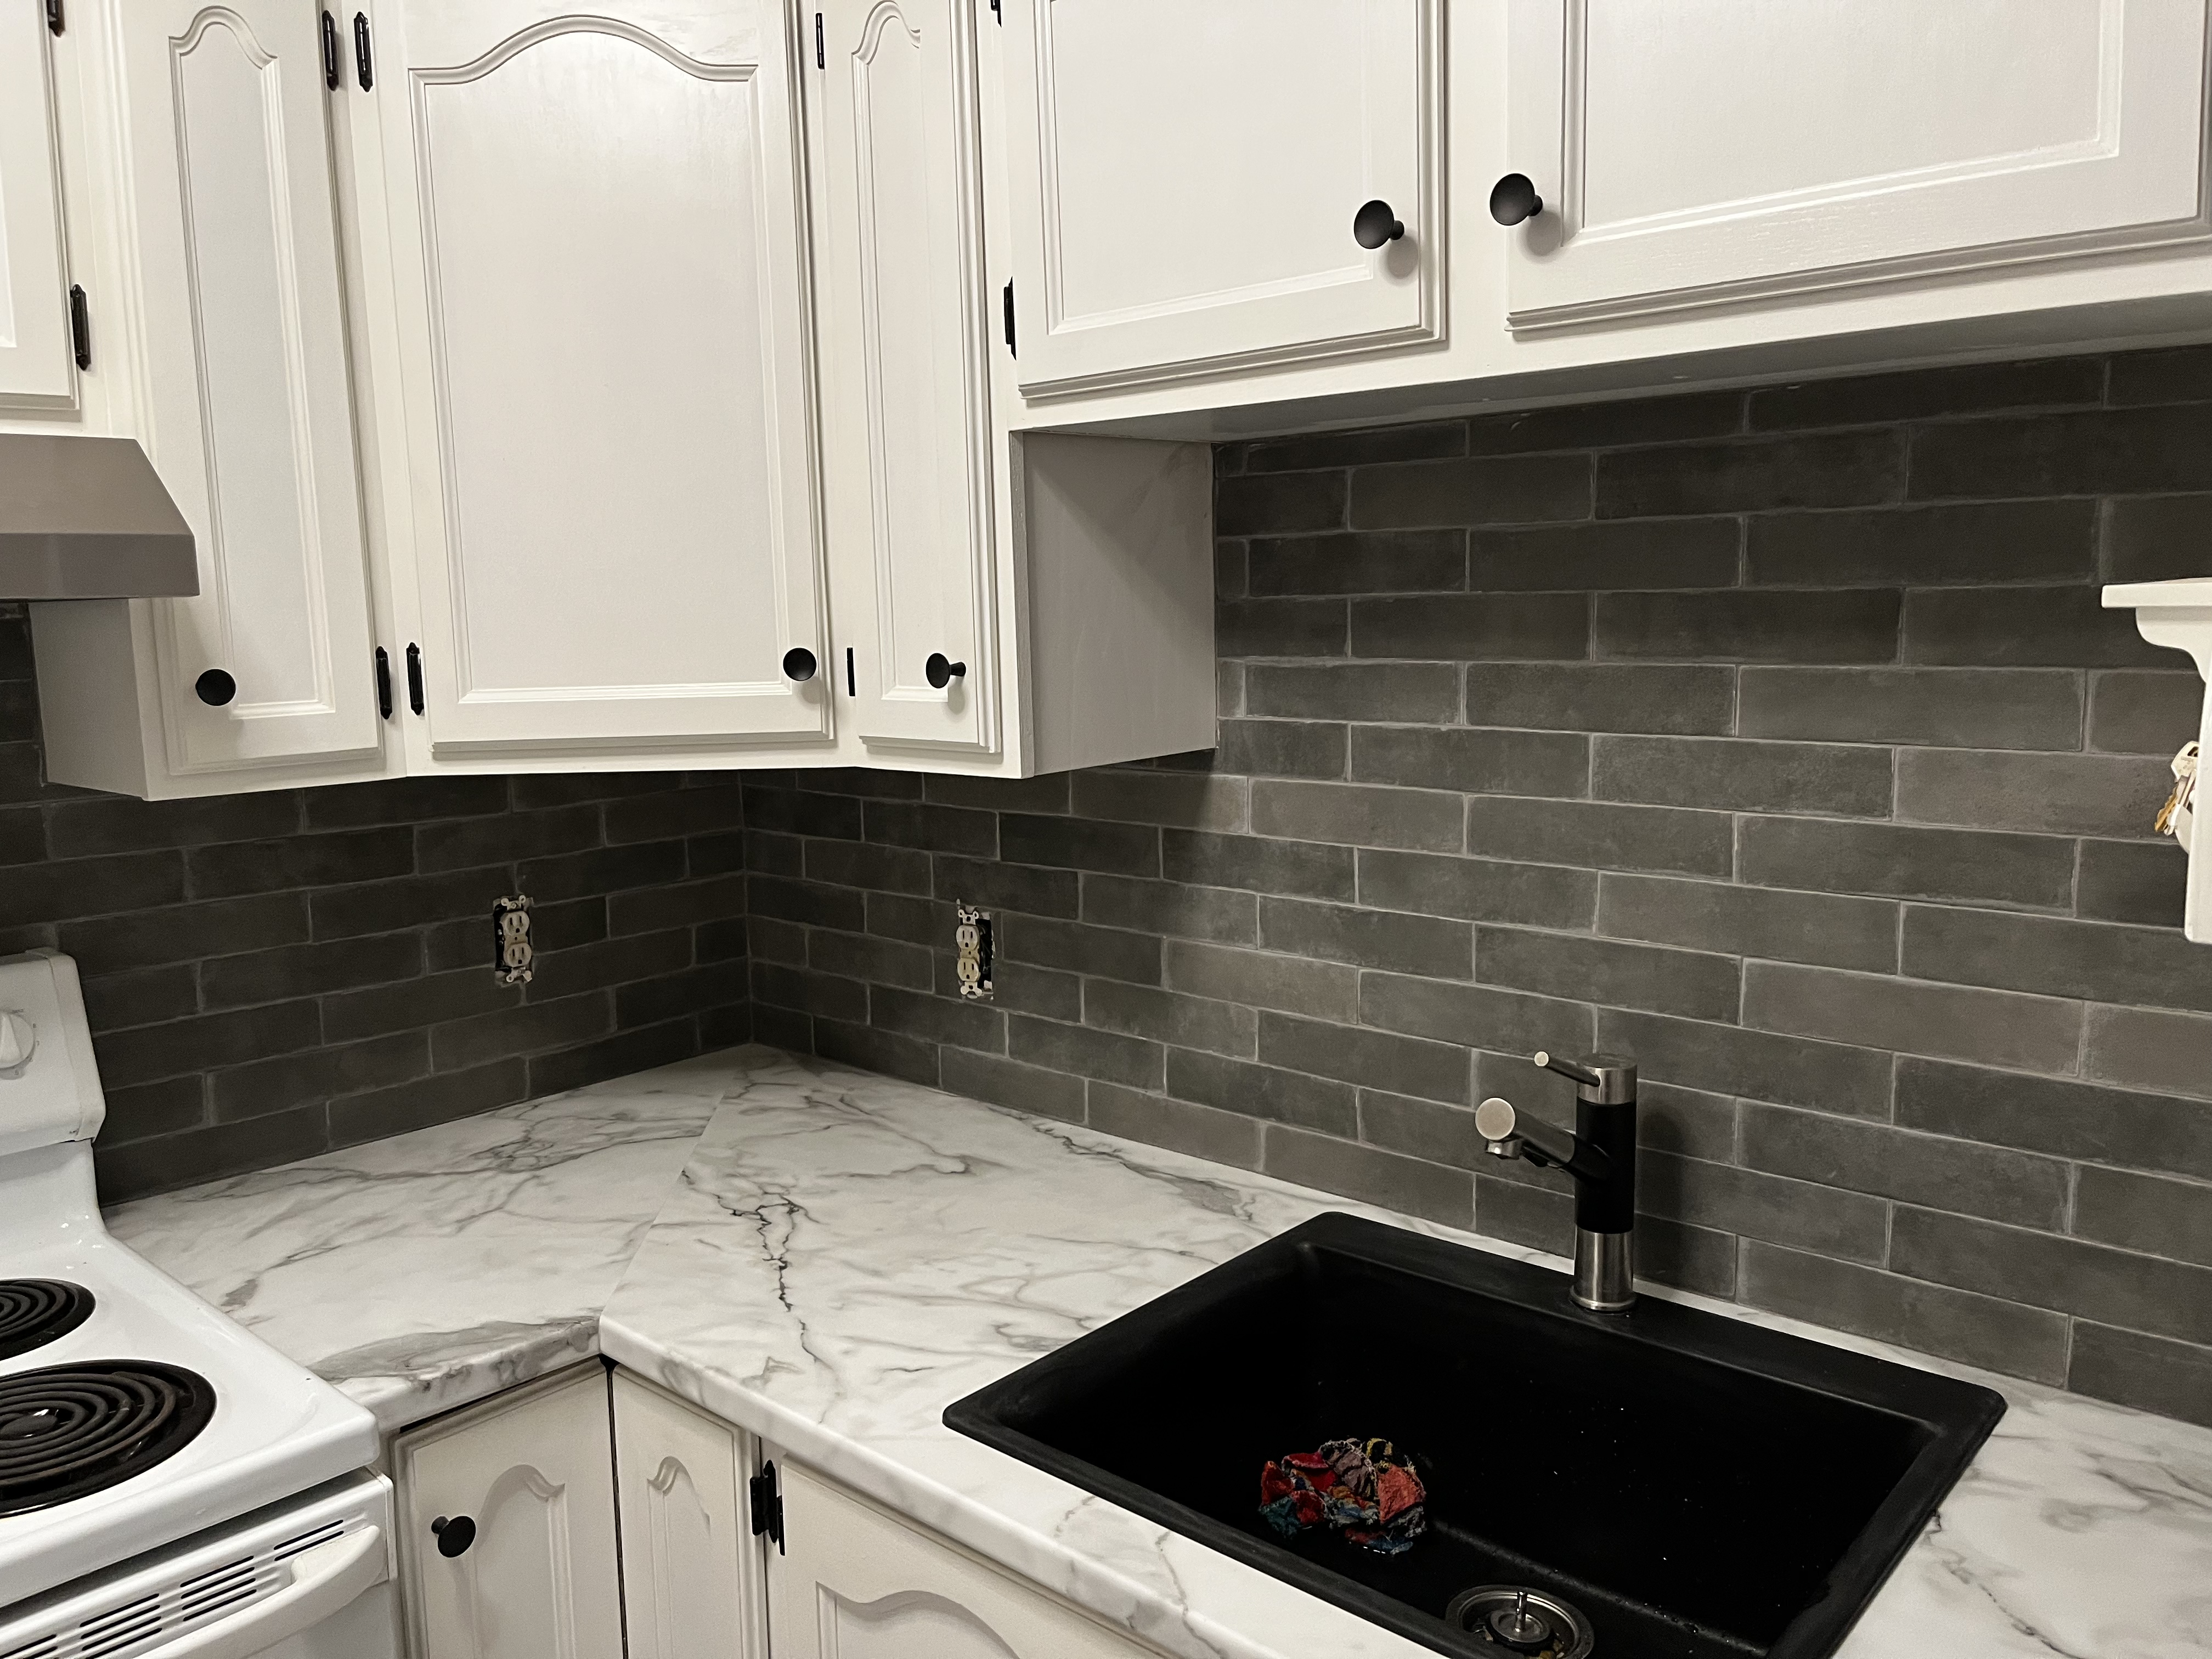 Classy Postform Laminate counters with tile backsplash and granite sink